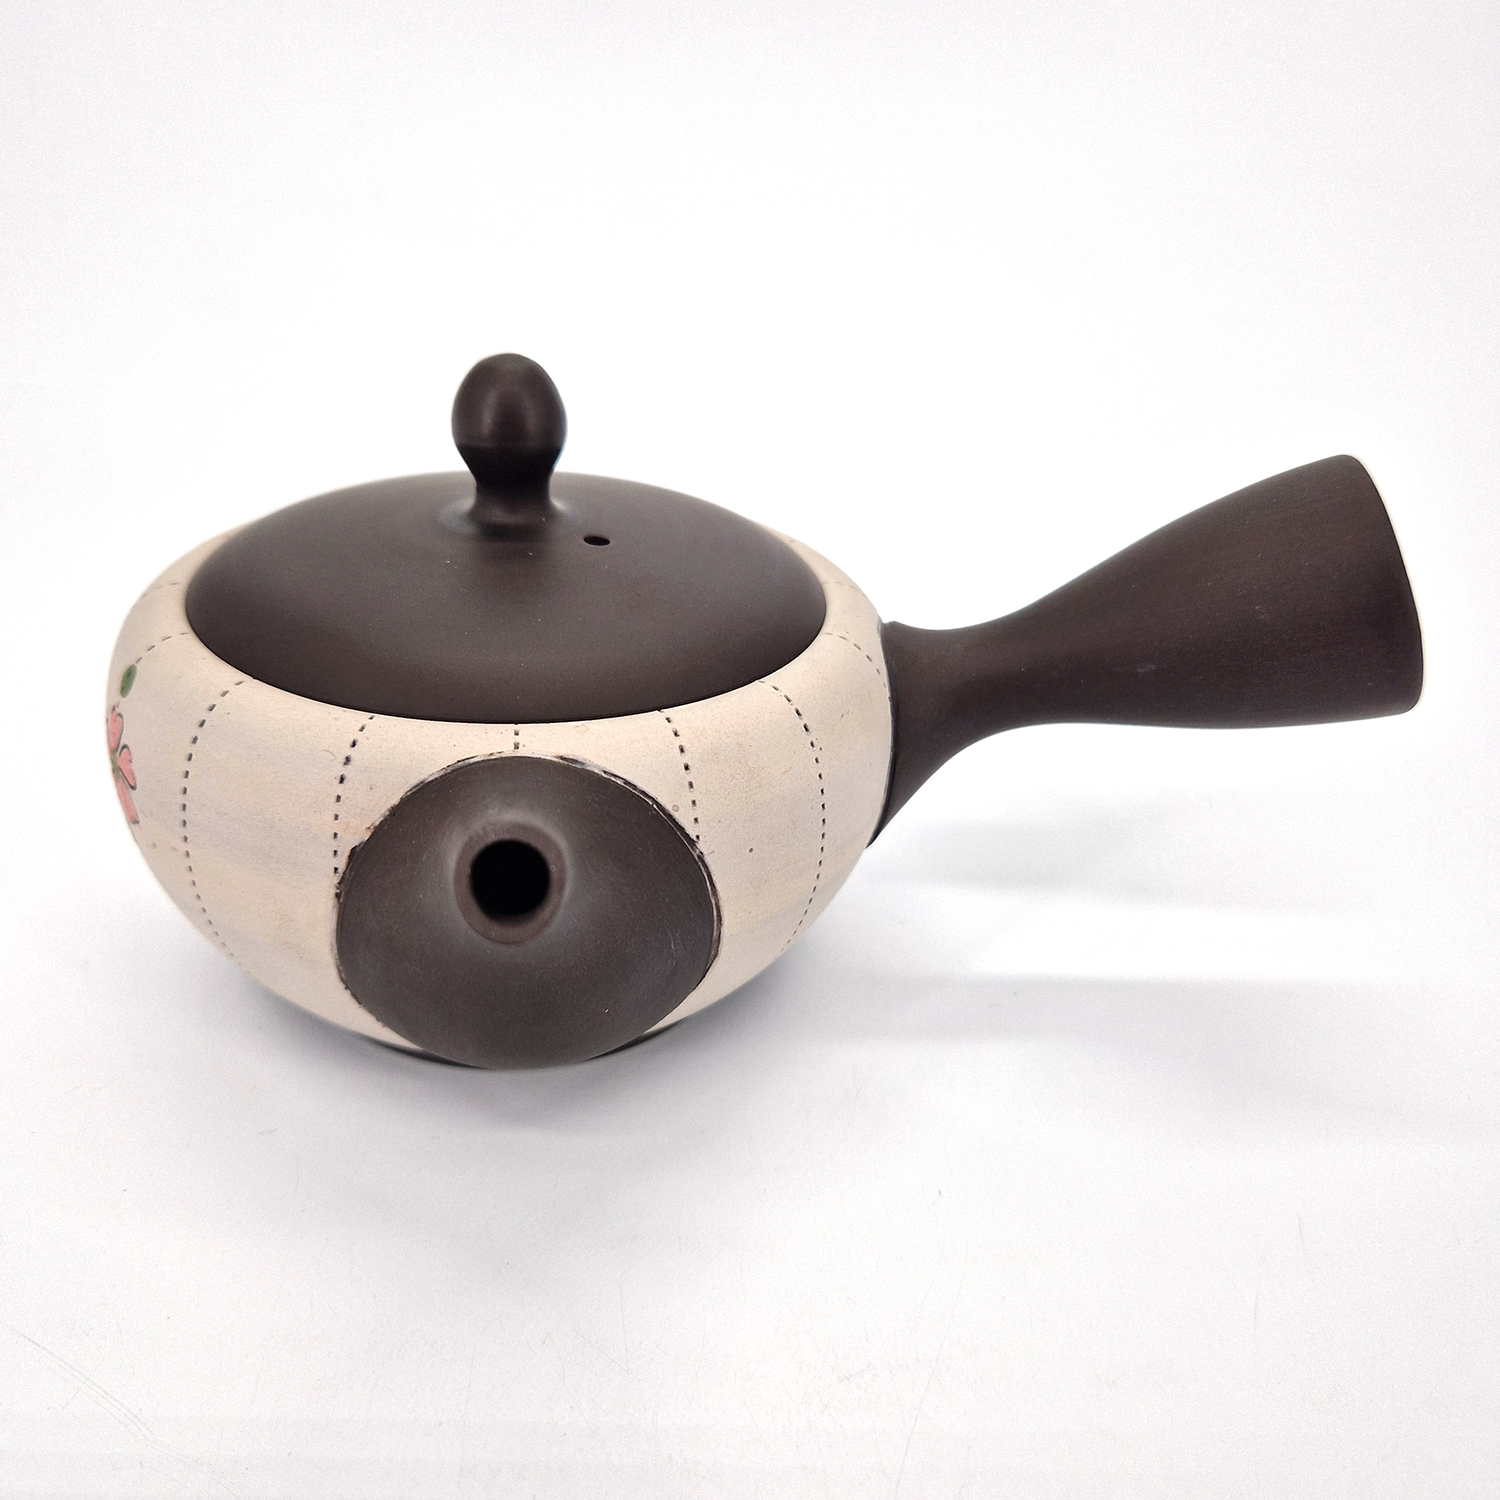 https://kyotoboutique.fr/67526/tokoname-japanese-kyusu-teapot-in-black-and-white-earthenware-with-flower-pattern-250cc.jpg